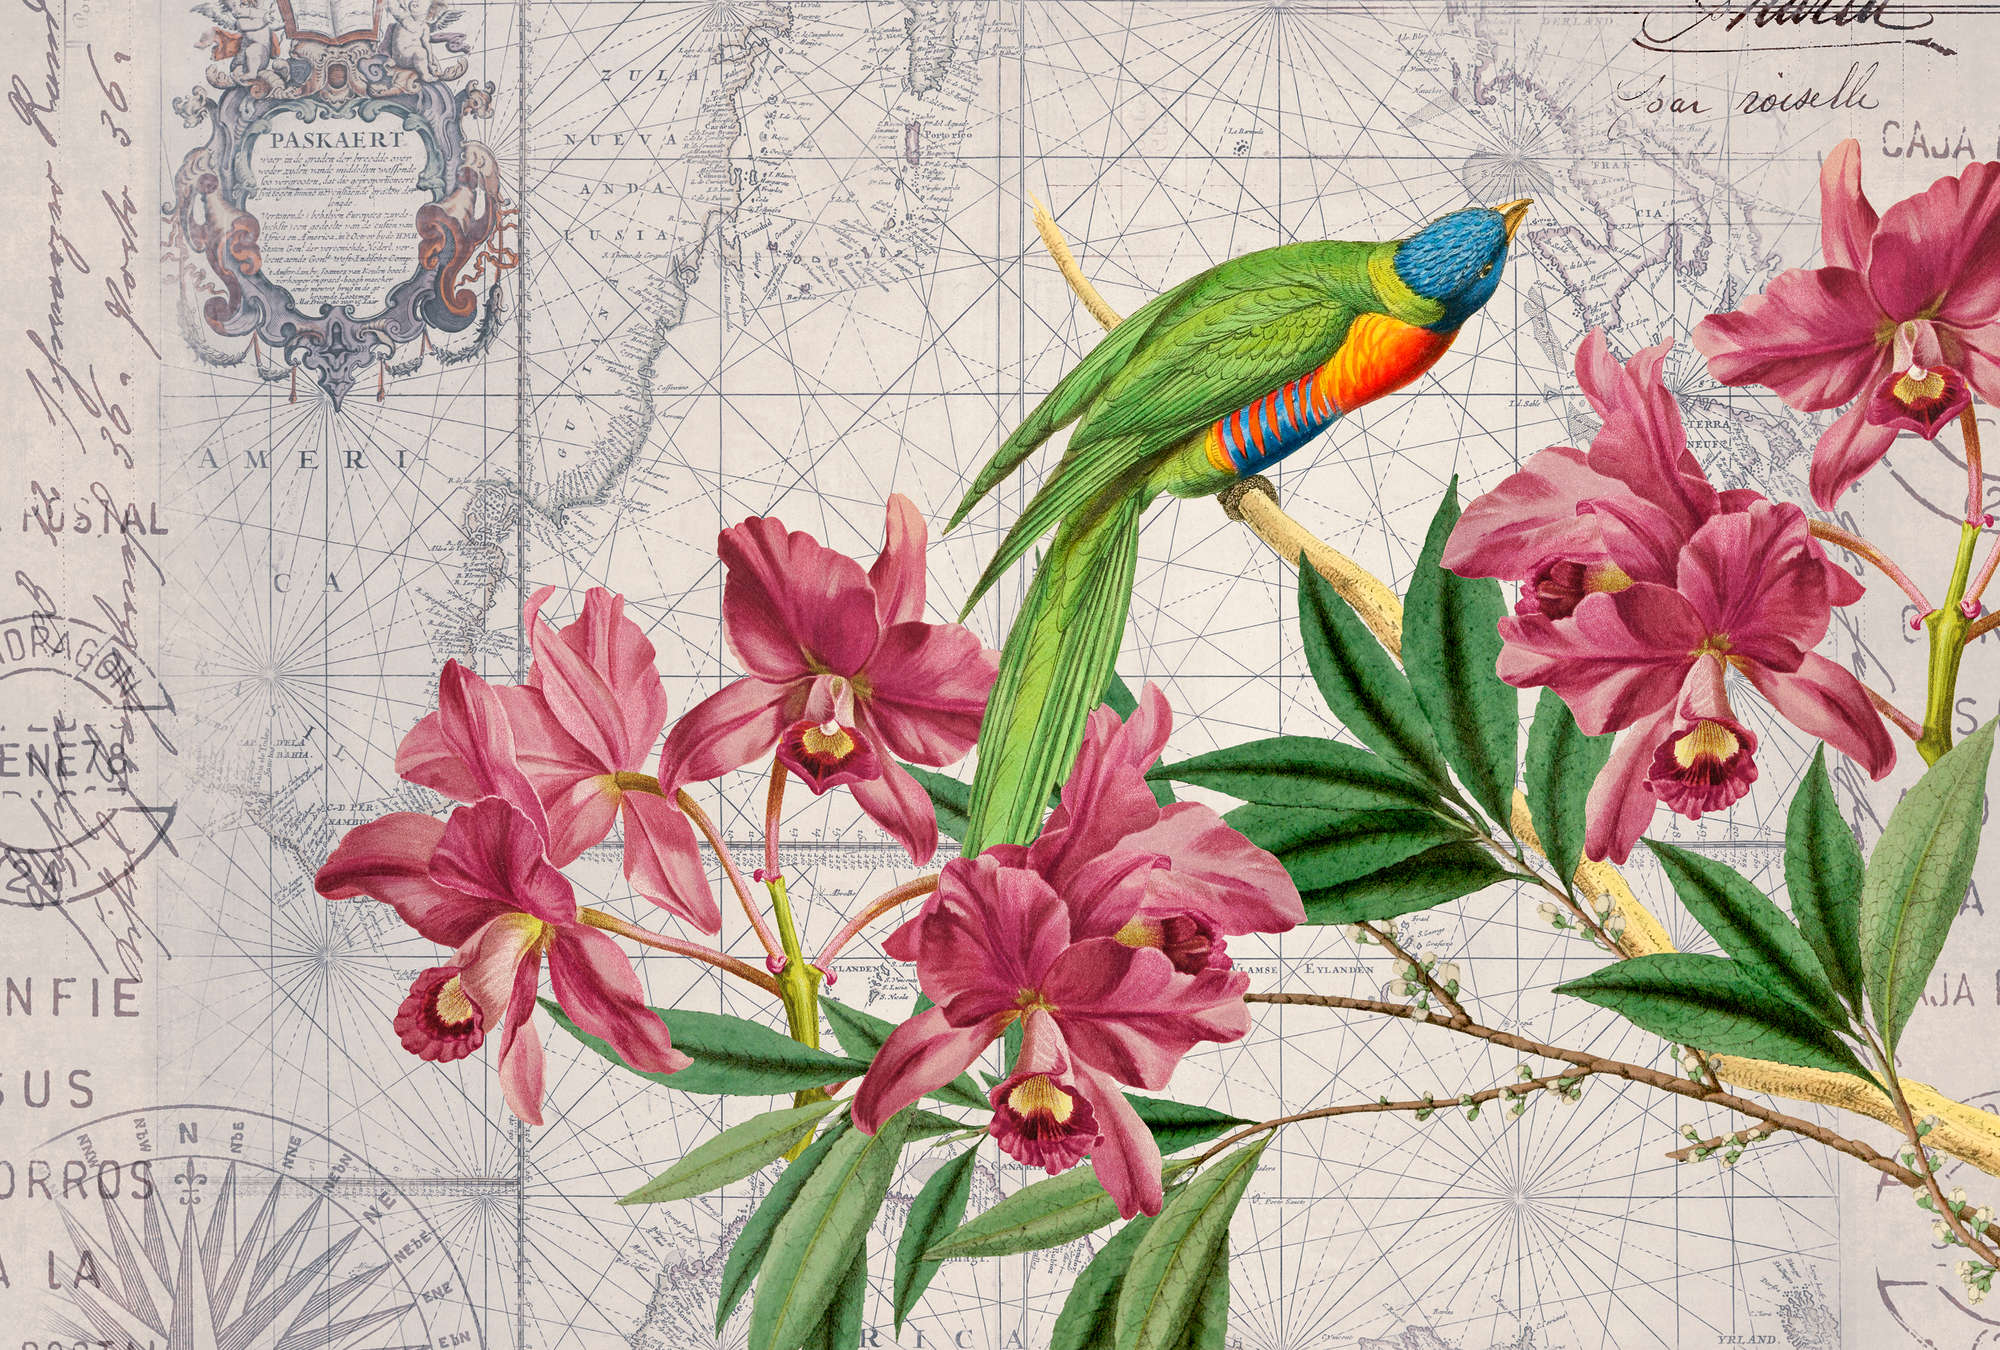             Fototapete Vintage Landkarten Look, Papagei & Blumen
        